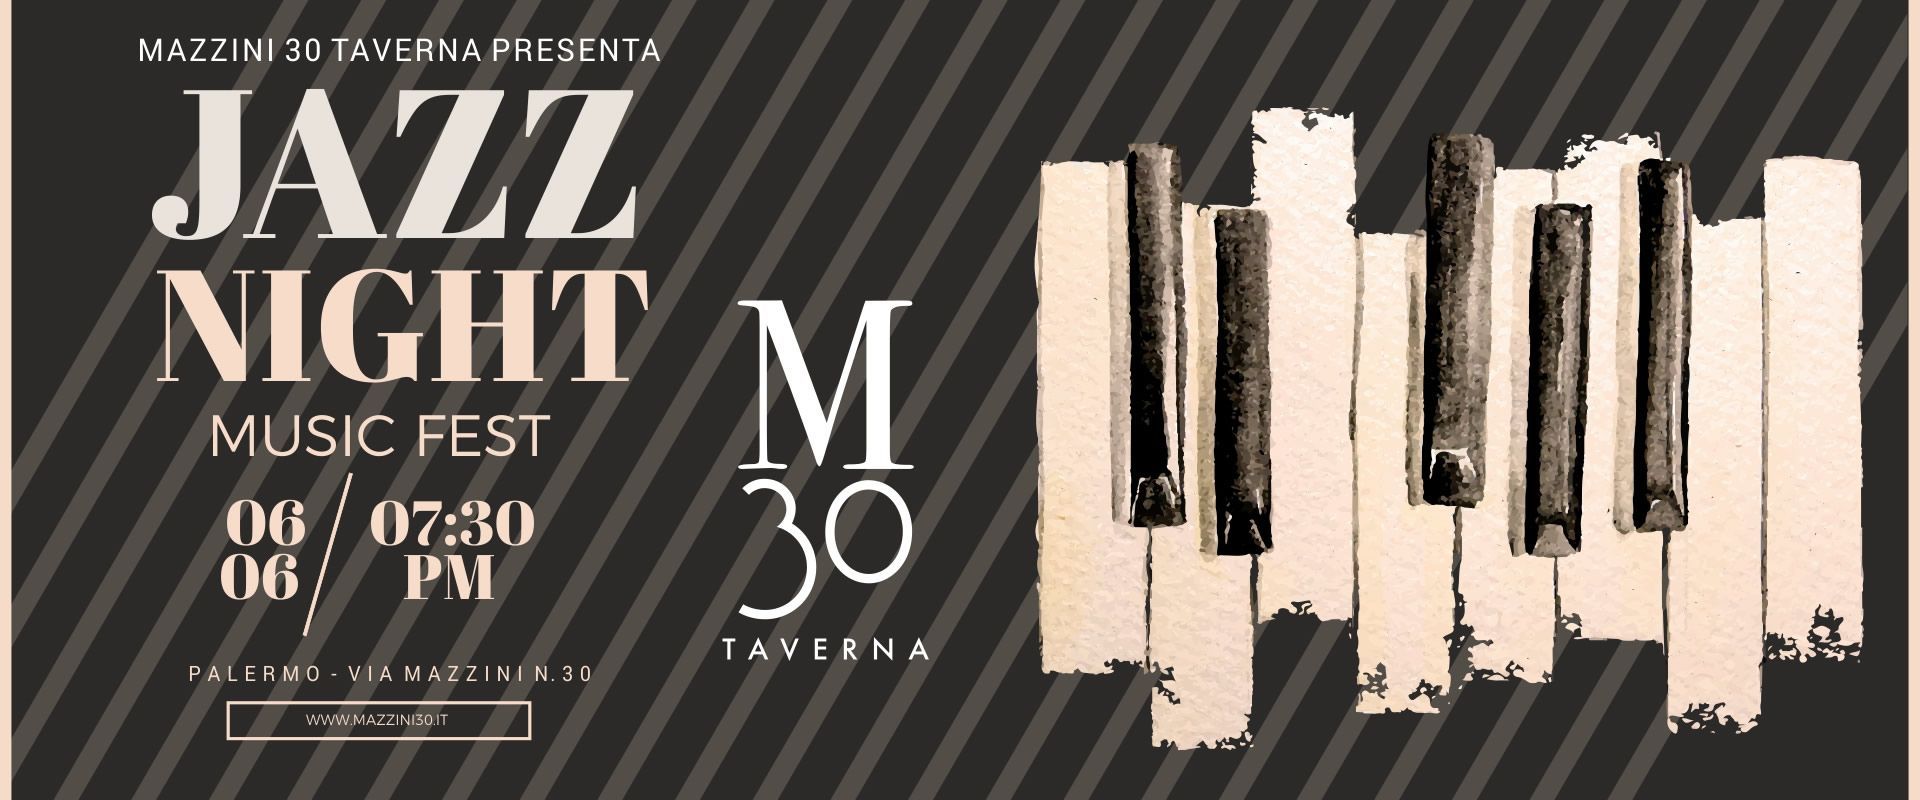 Jazz Night Music Fest at Mazzini 30